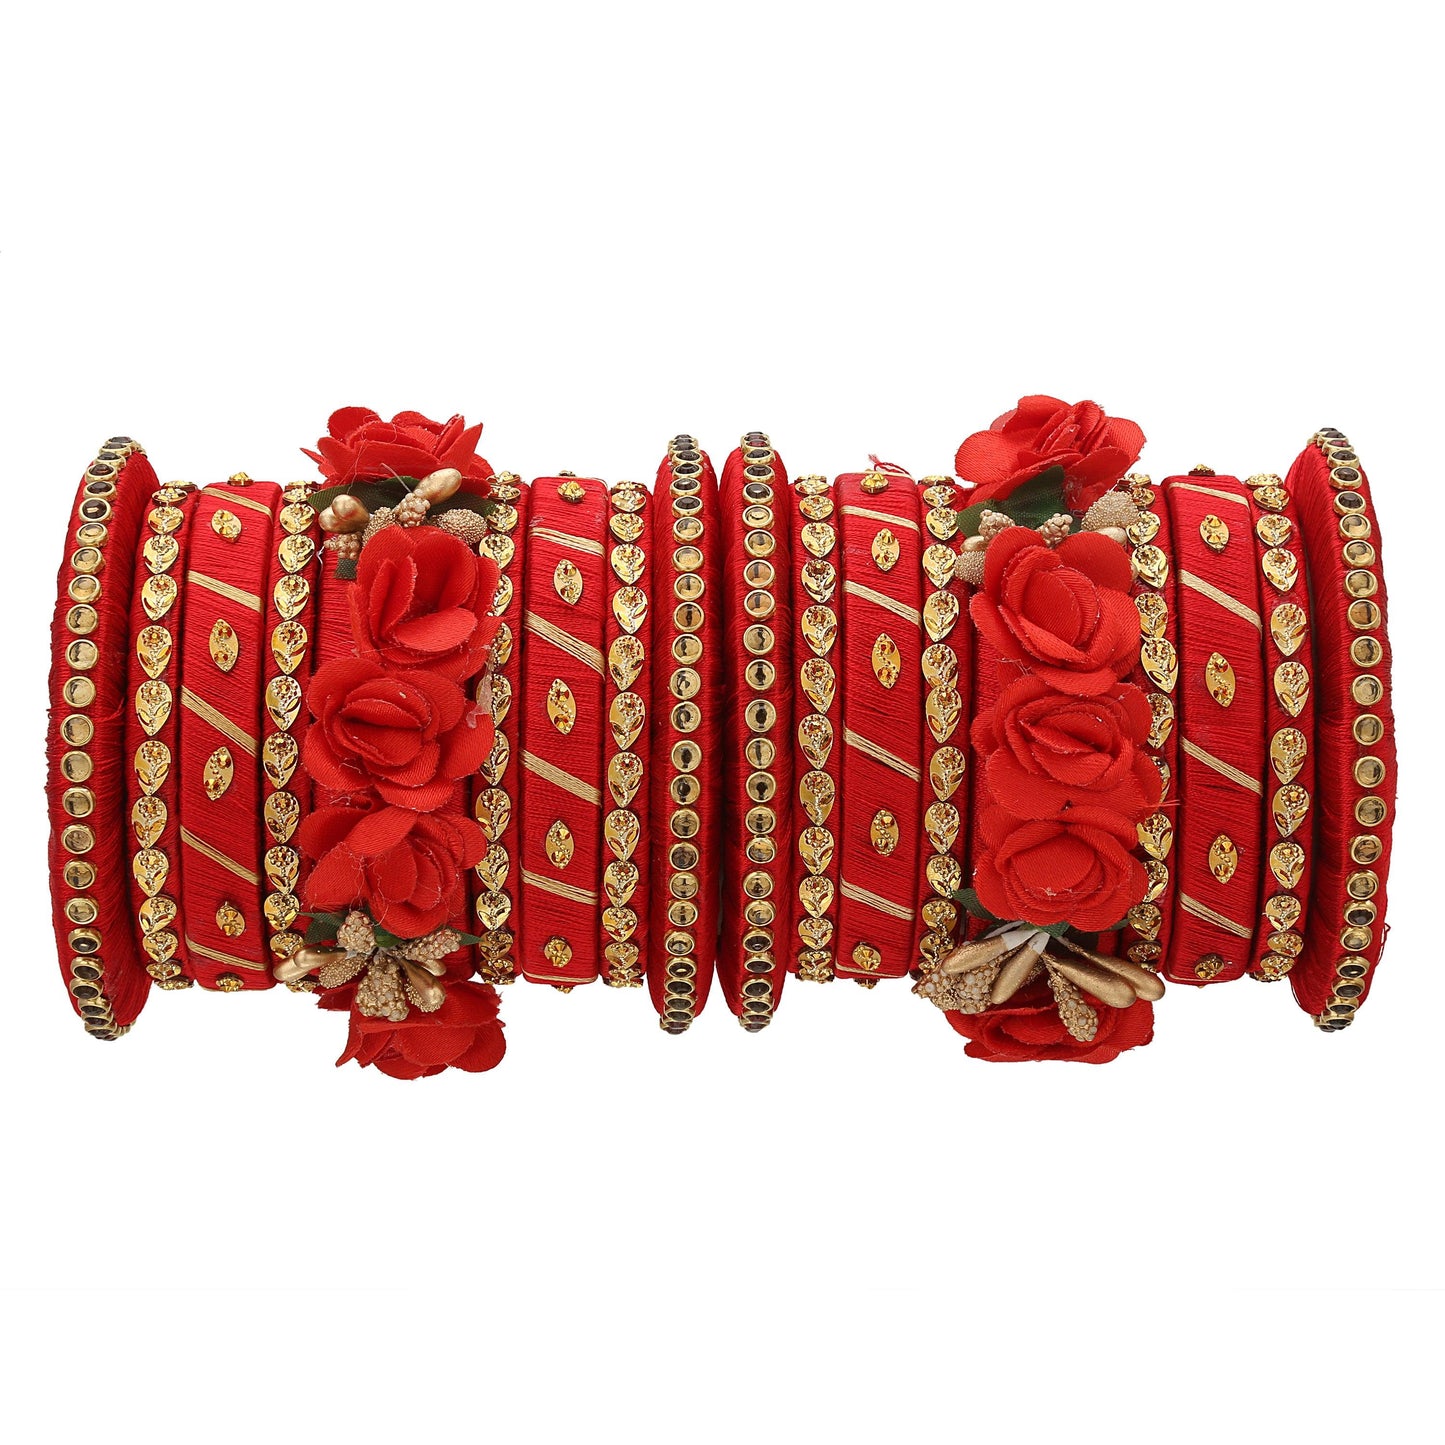 sukriti stylish handmade red flower designer silk thread plastic bridal chuda wedding bangles for women – set of 18